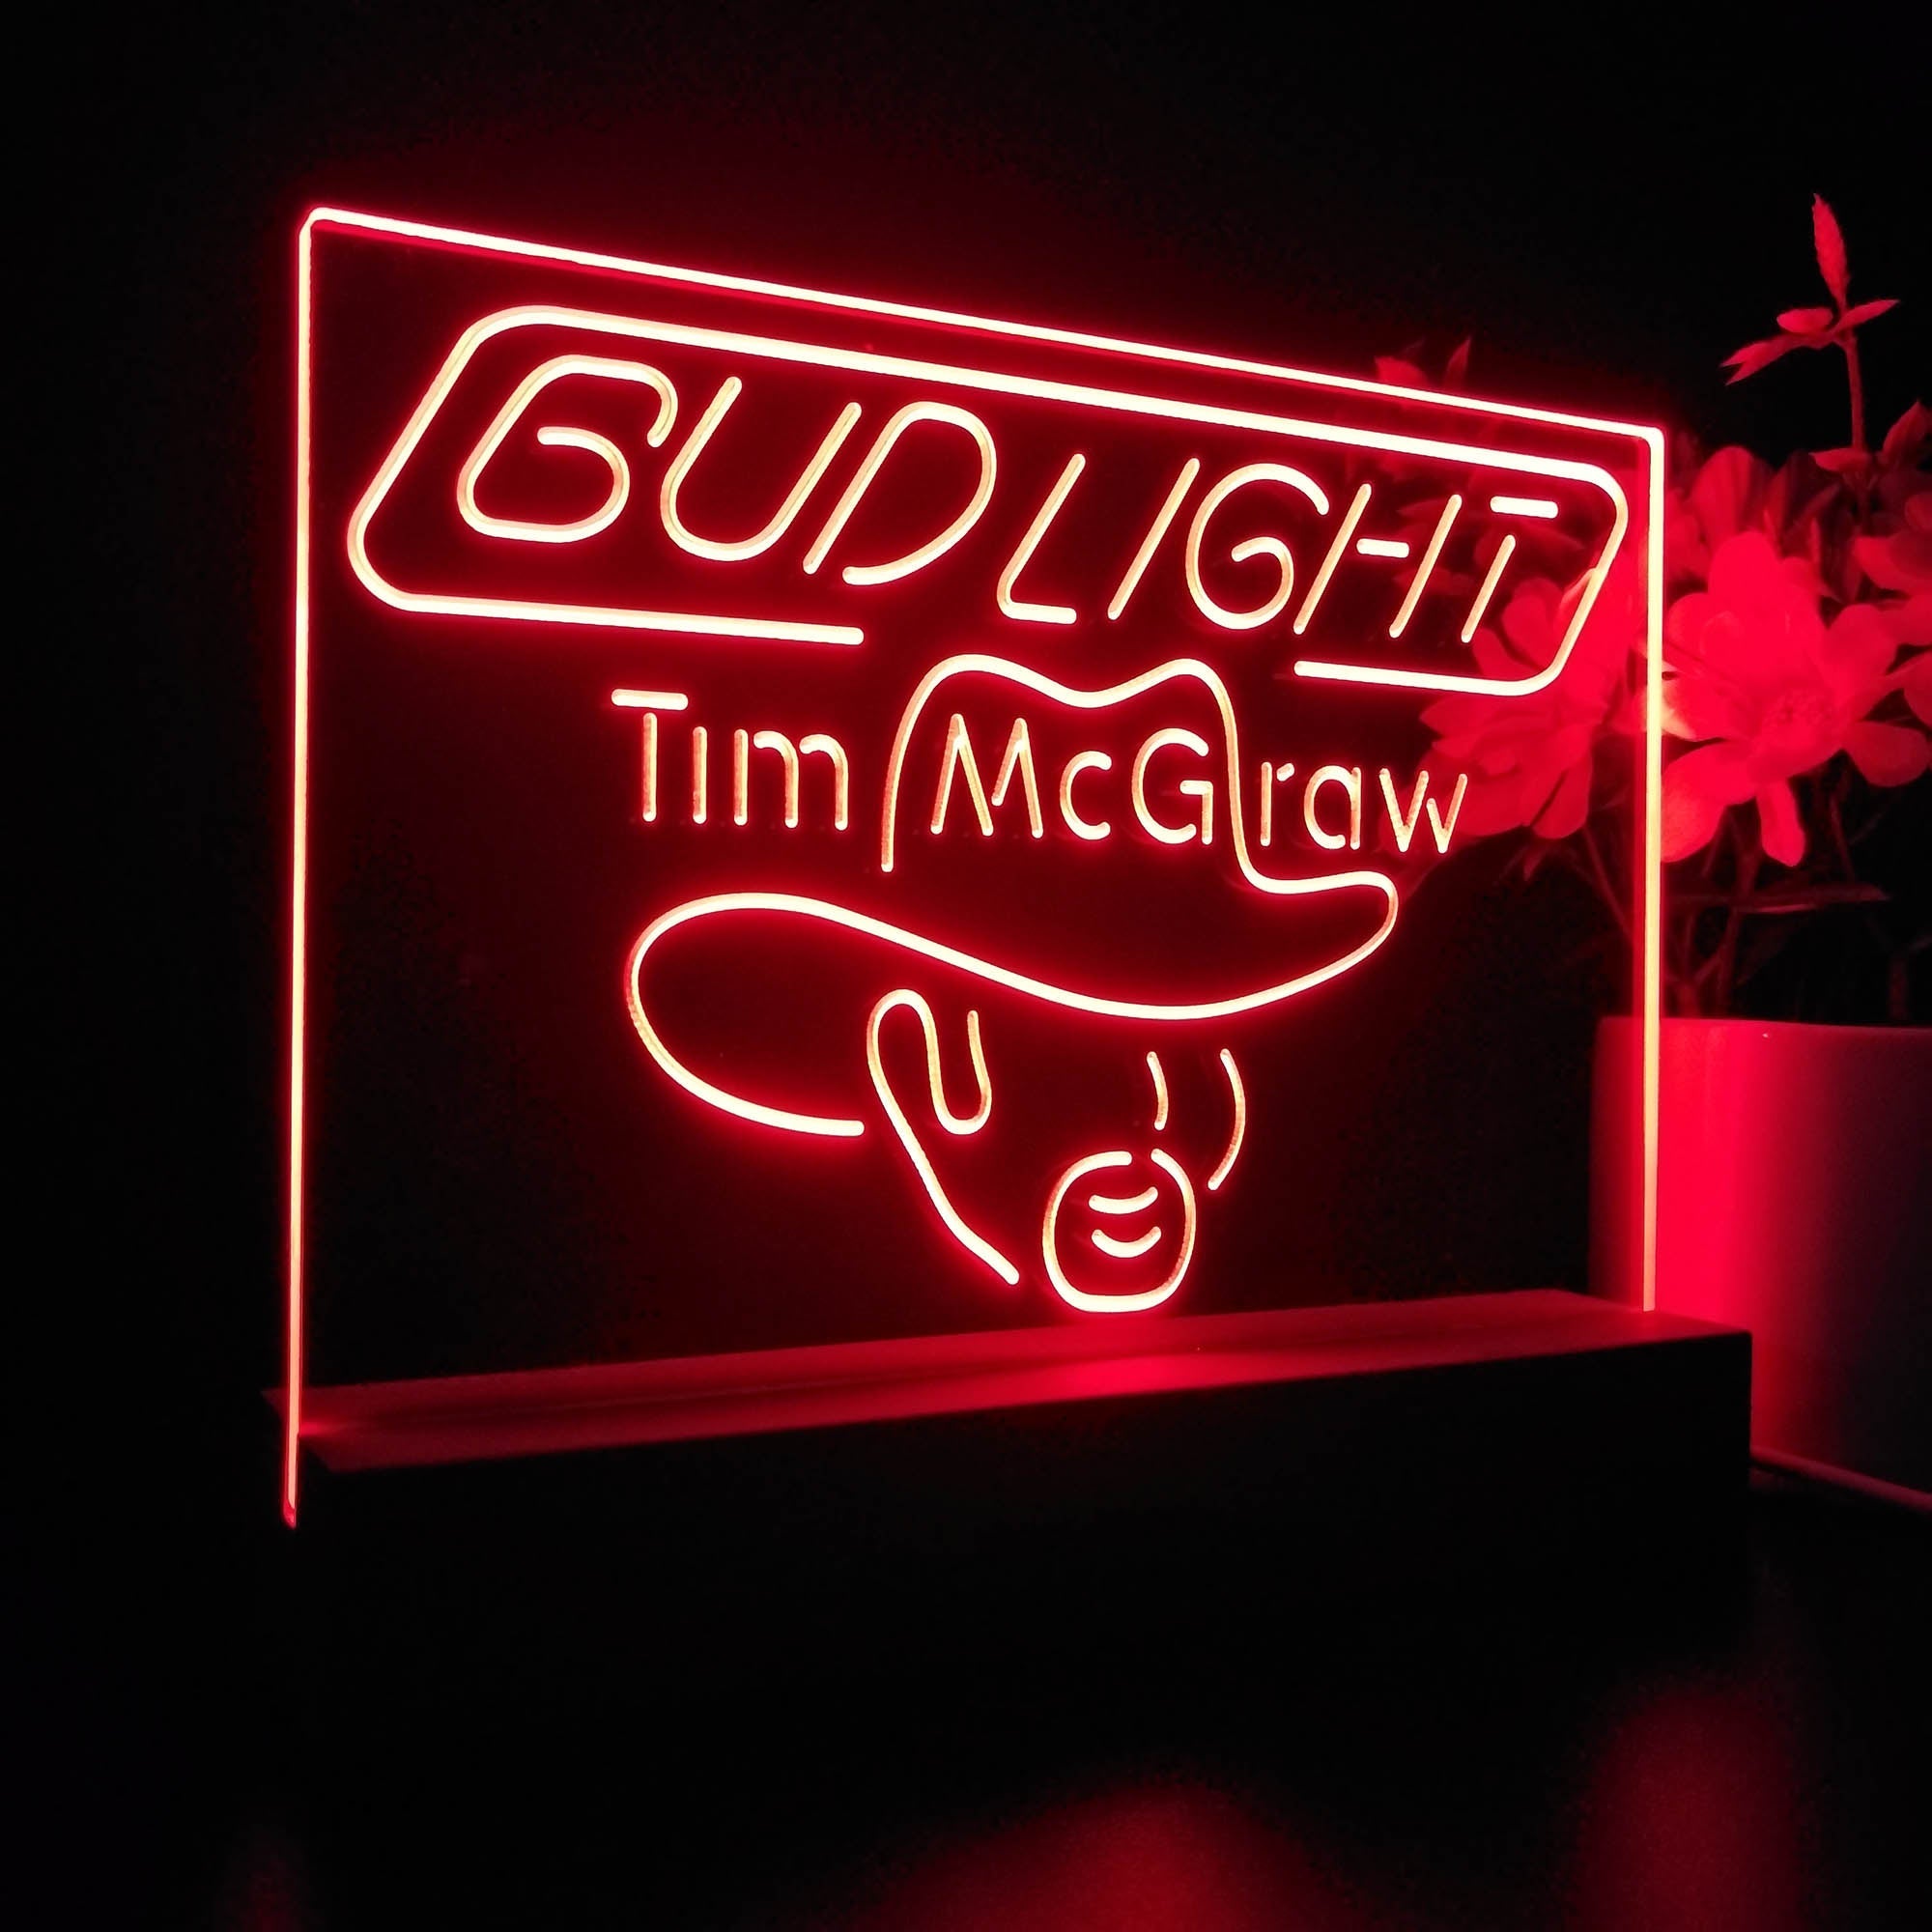 Bud Light Tim McGraw Beer Bar Neon Sign Pub Bar Lamp